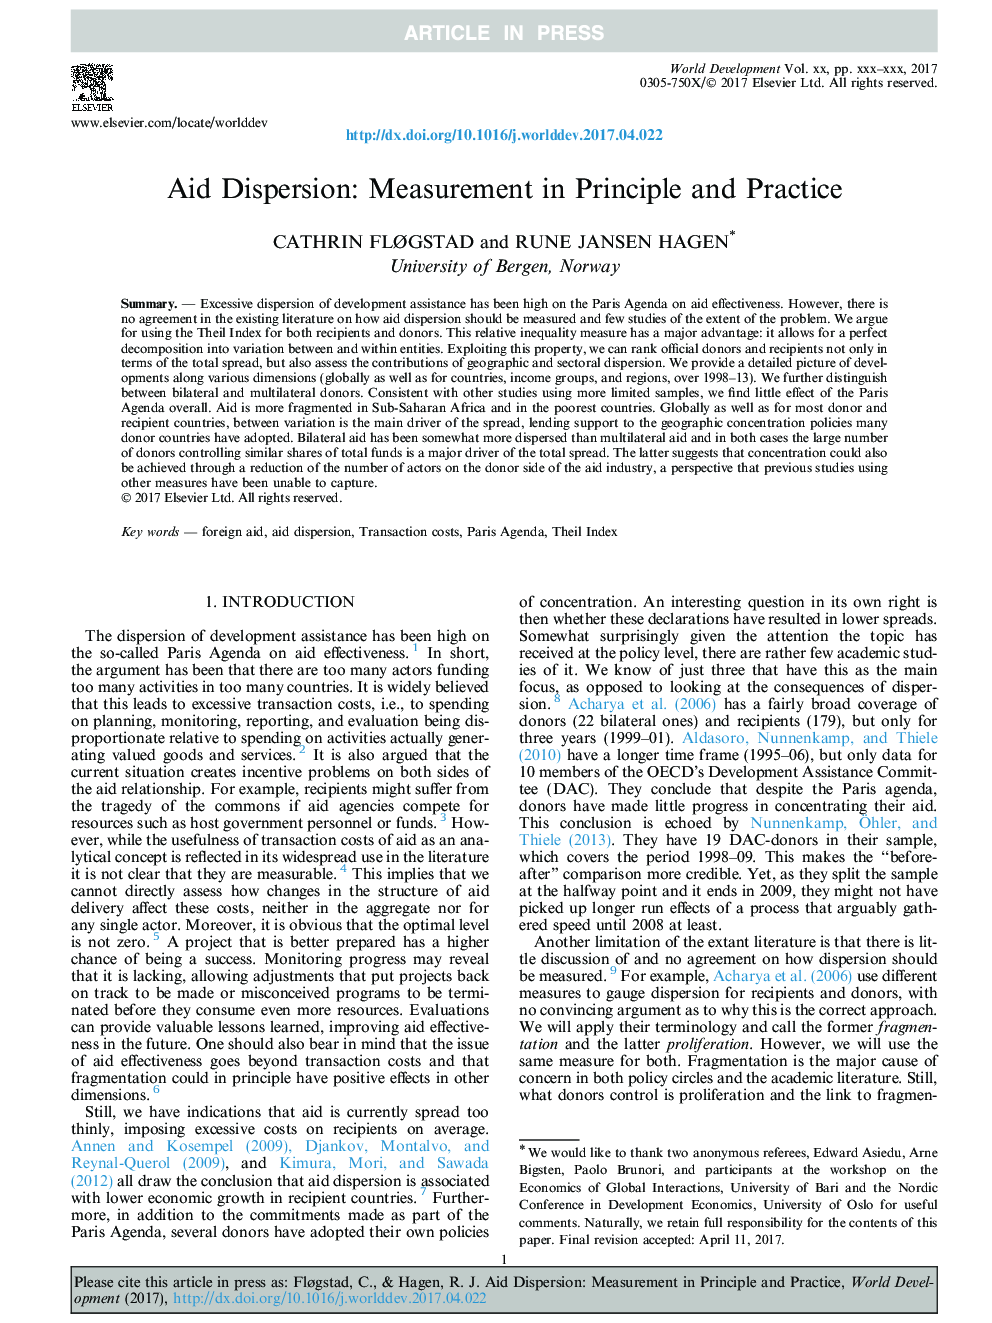 Aid Dispersion: Measurement in Principle and Practice